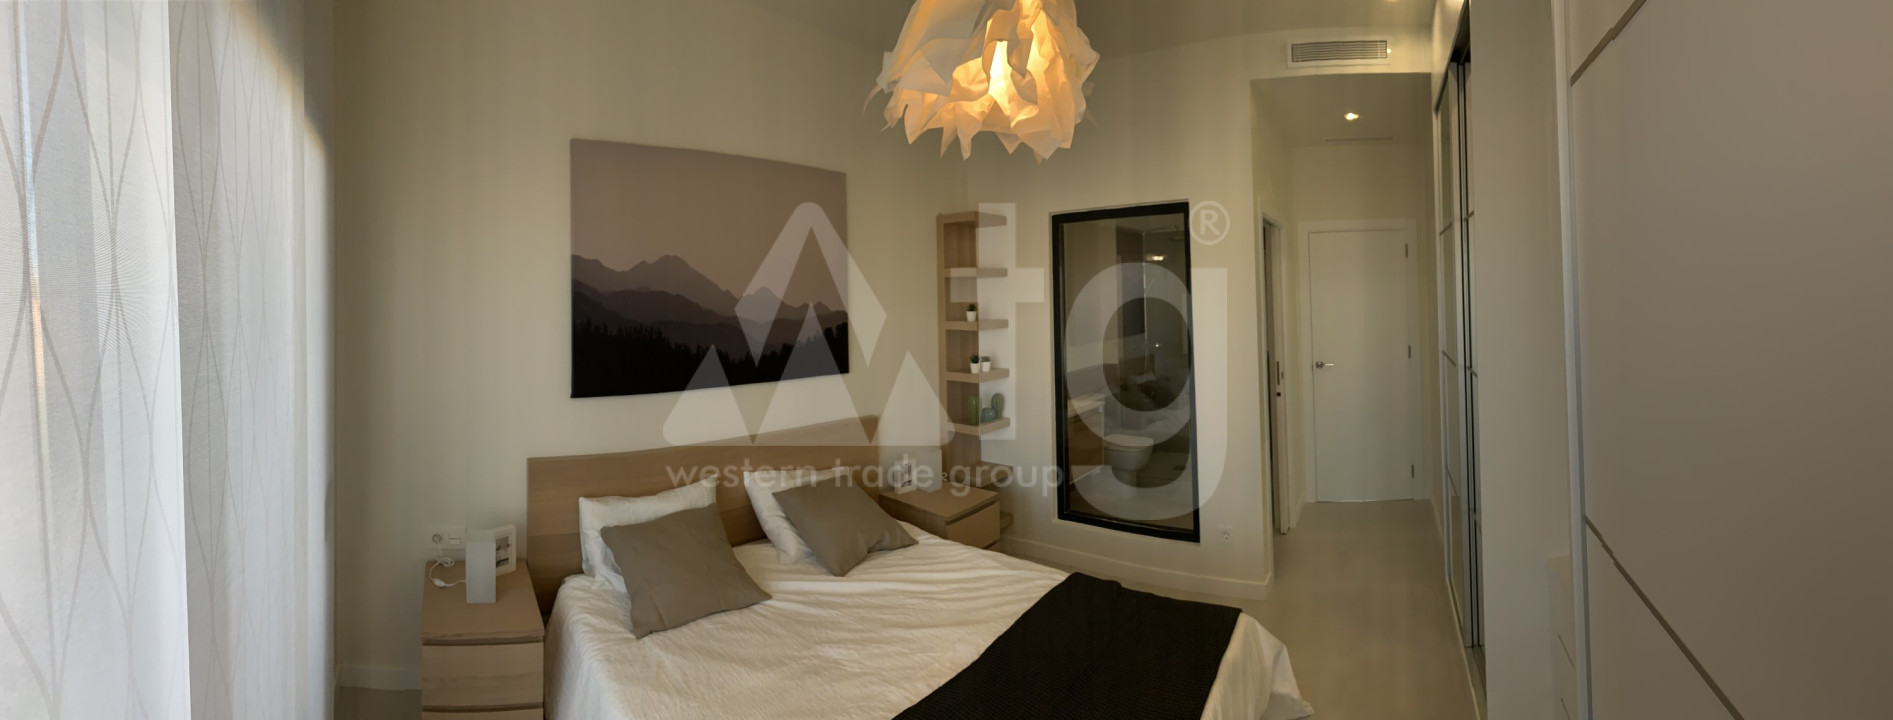 2 bedroom Apartment in Alhama de Murcia - OI119369 - 16